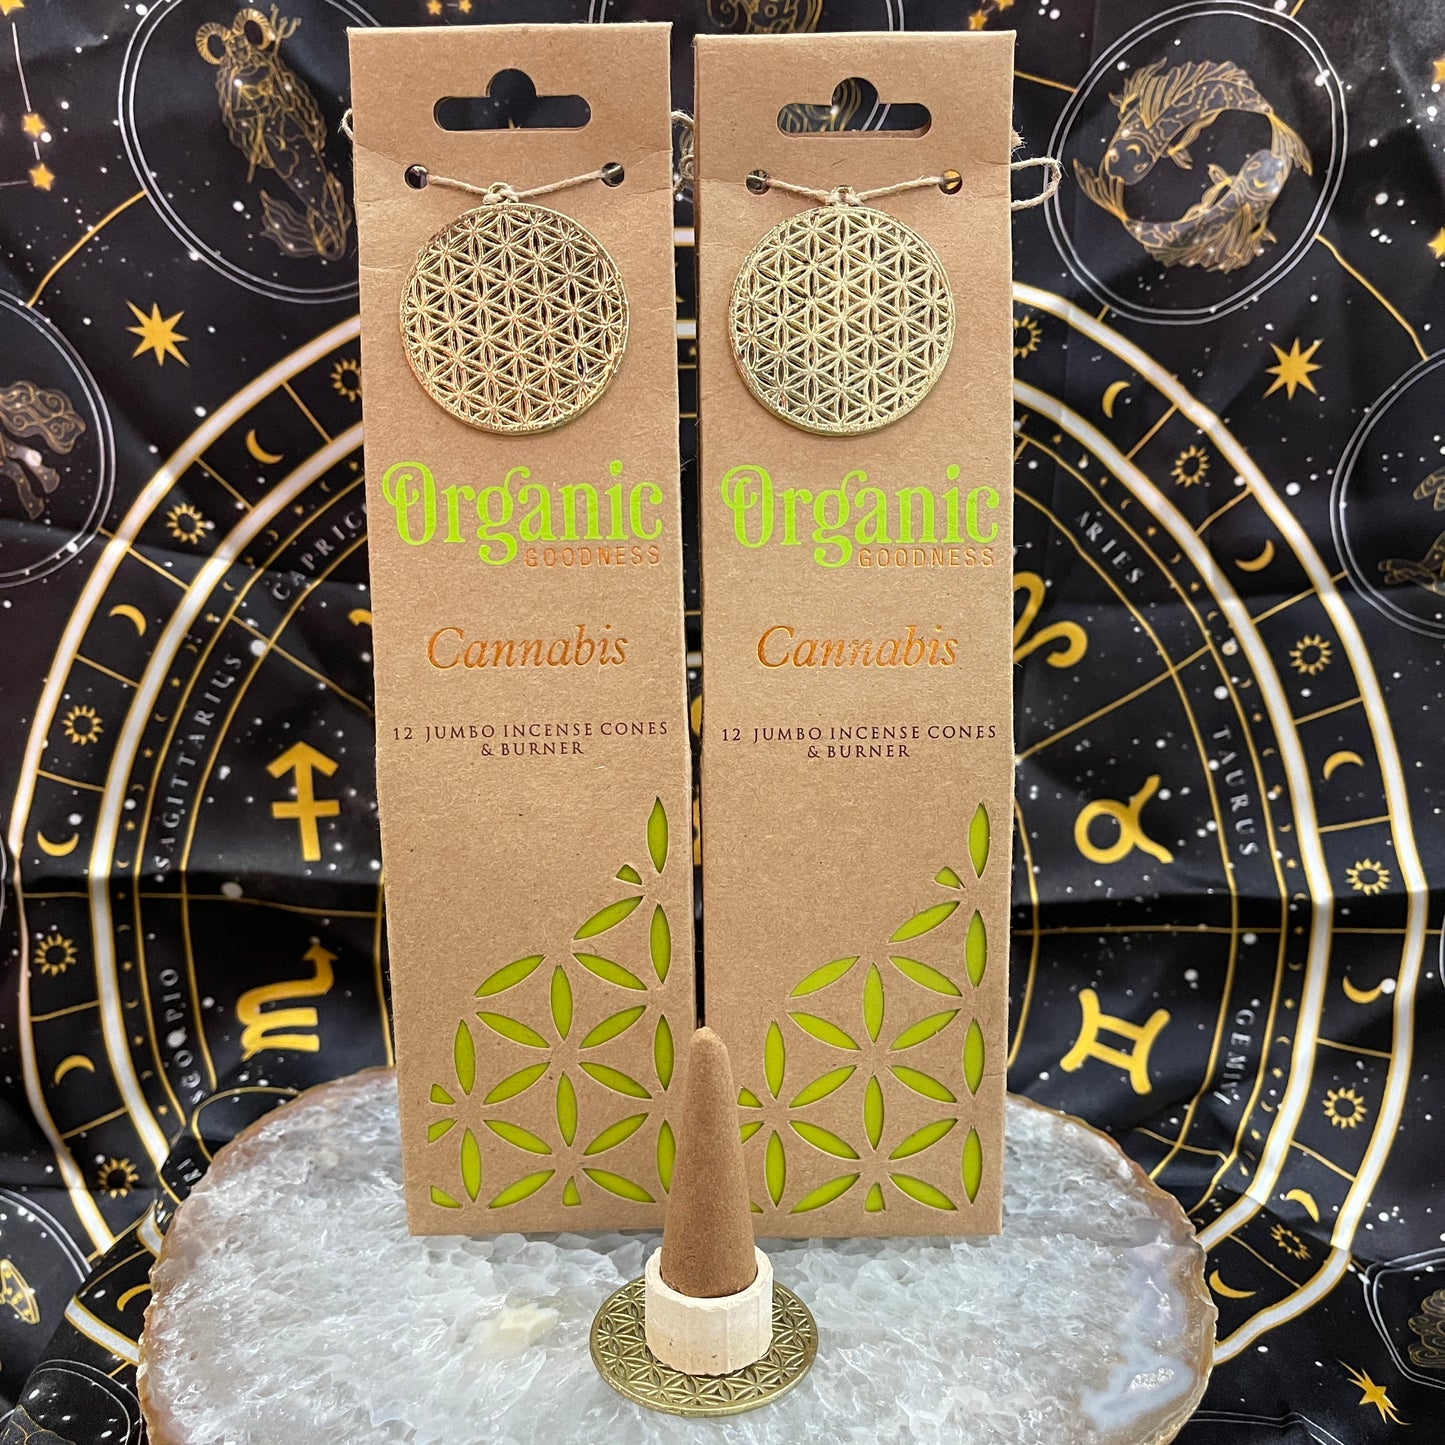 Organic Goodness Masala Incense Cones | Cannabis